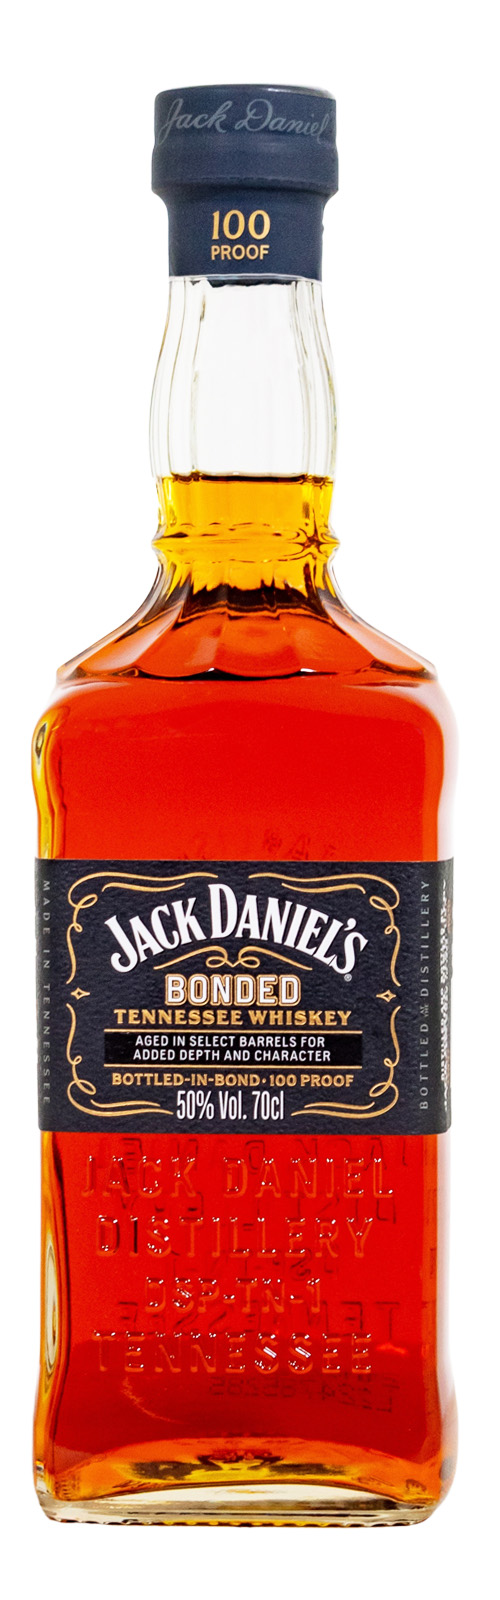 Jack Daniel's Single Barrel 100 Proof Tennessee Whiskey 0.7L (50% Vol.) - Jack  Daniel's - Whisky